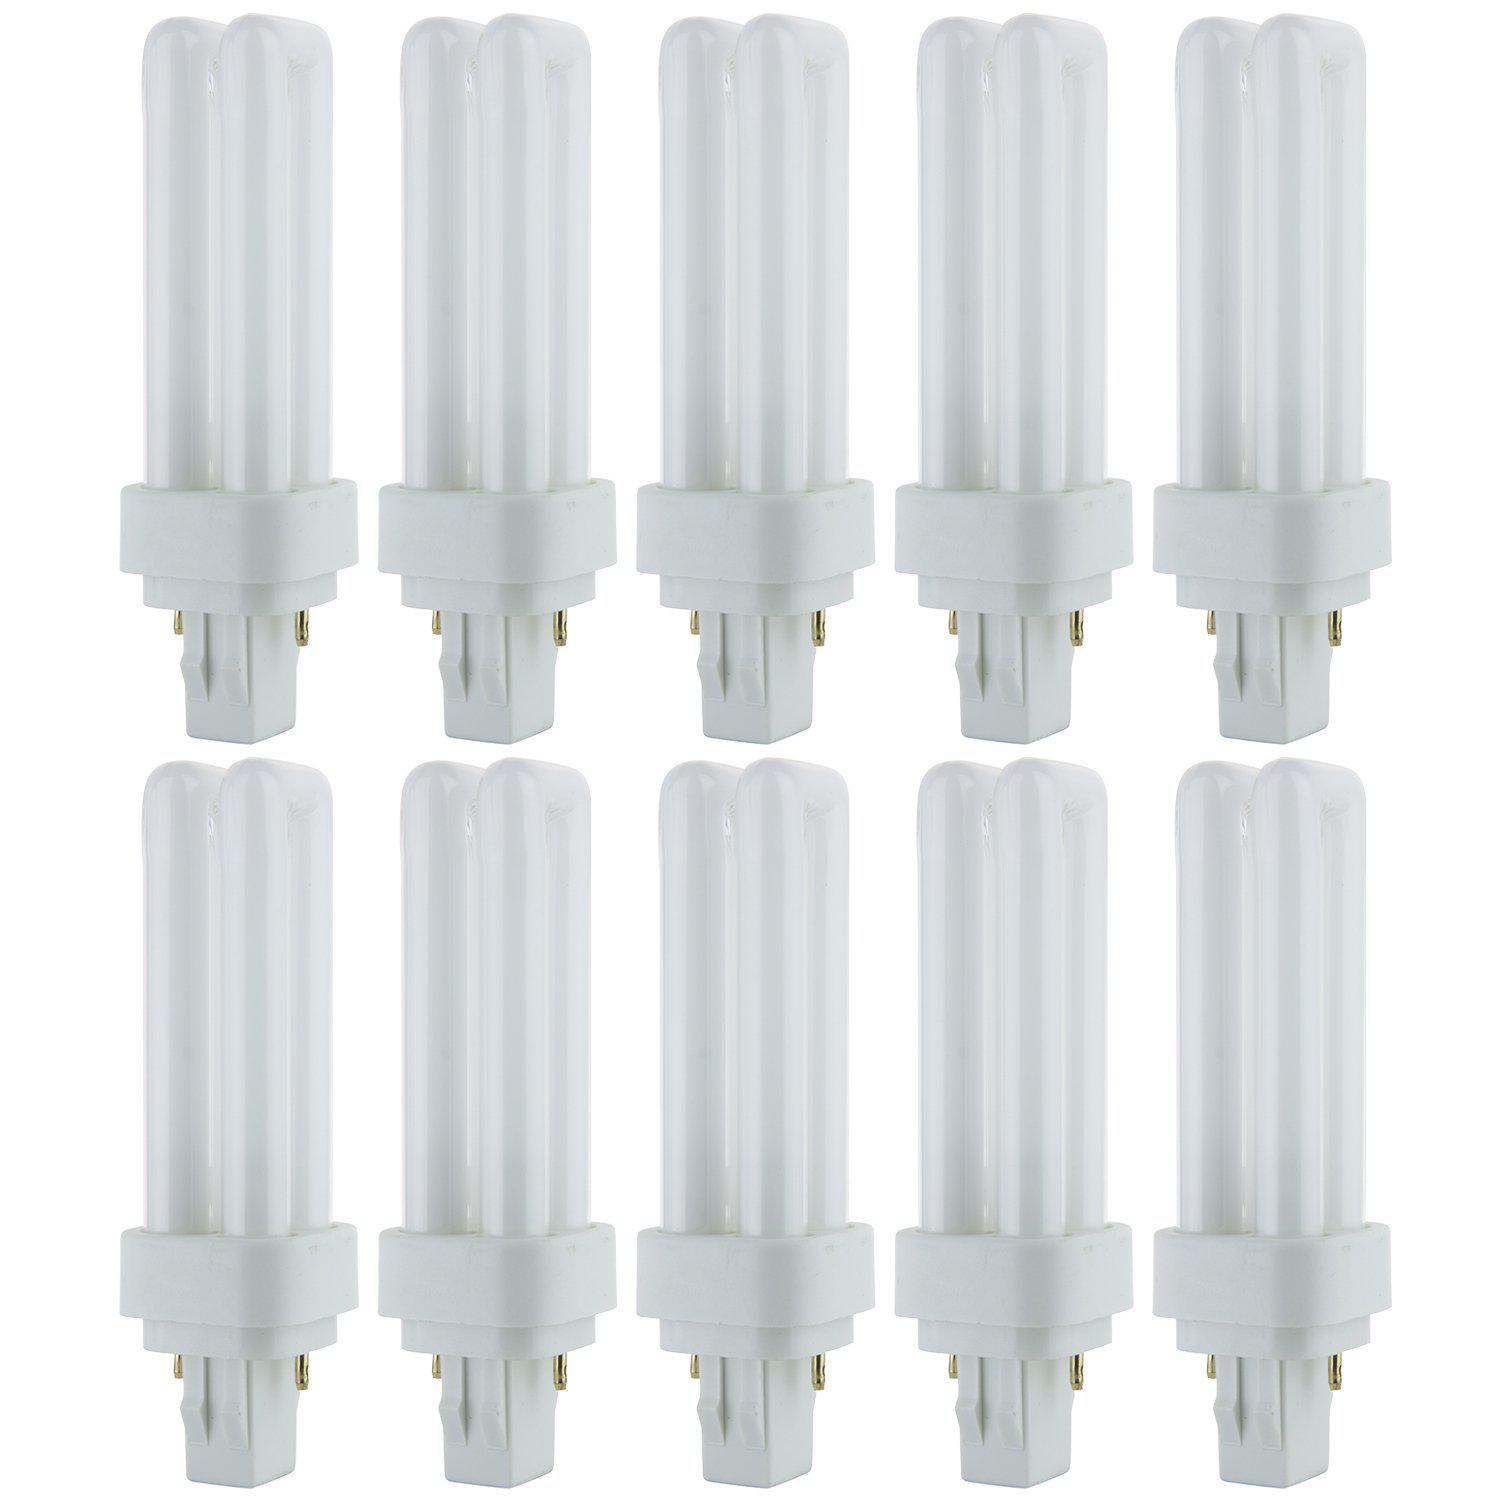 sunlite pld13/sp65k/10pk 6500k daylight fluorescent 13w pld double u-shaped twin tube cfl bulbs with 2-pin gx23-2 base (10 pa